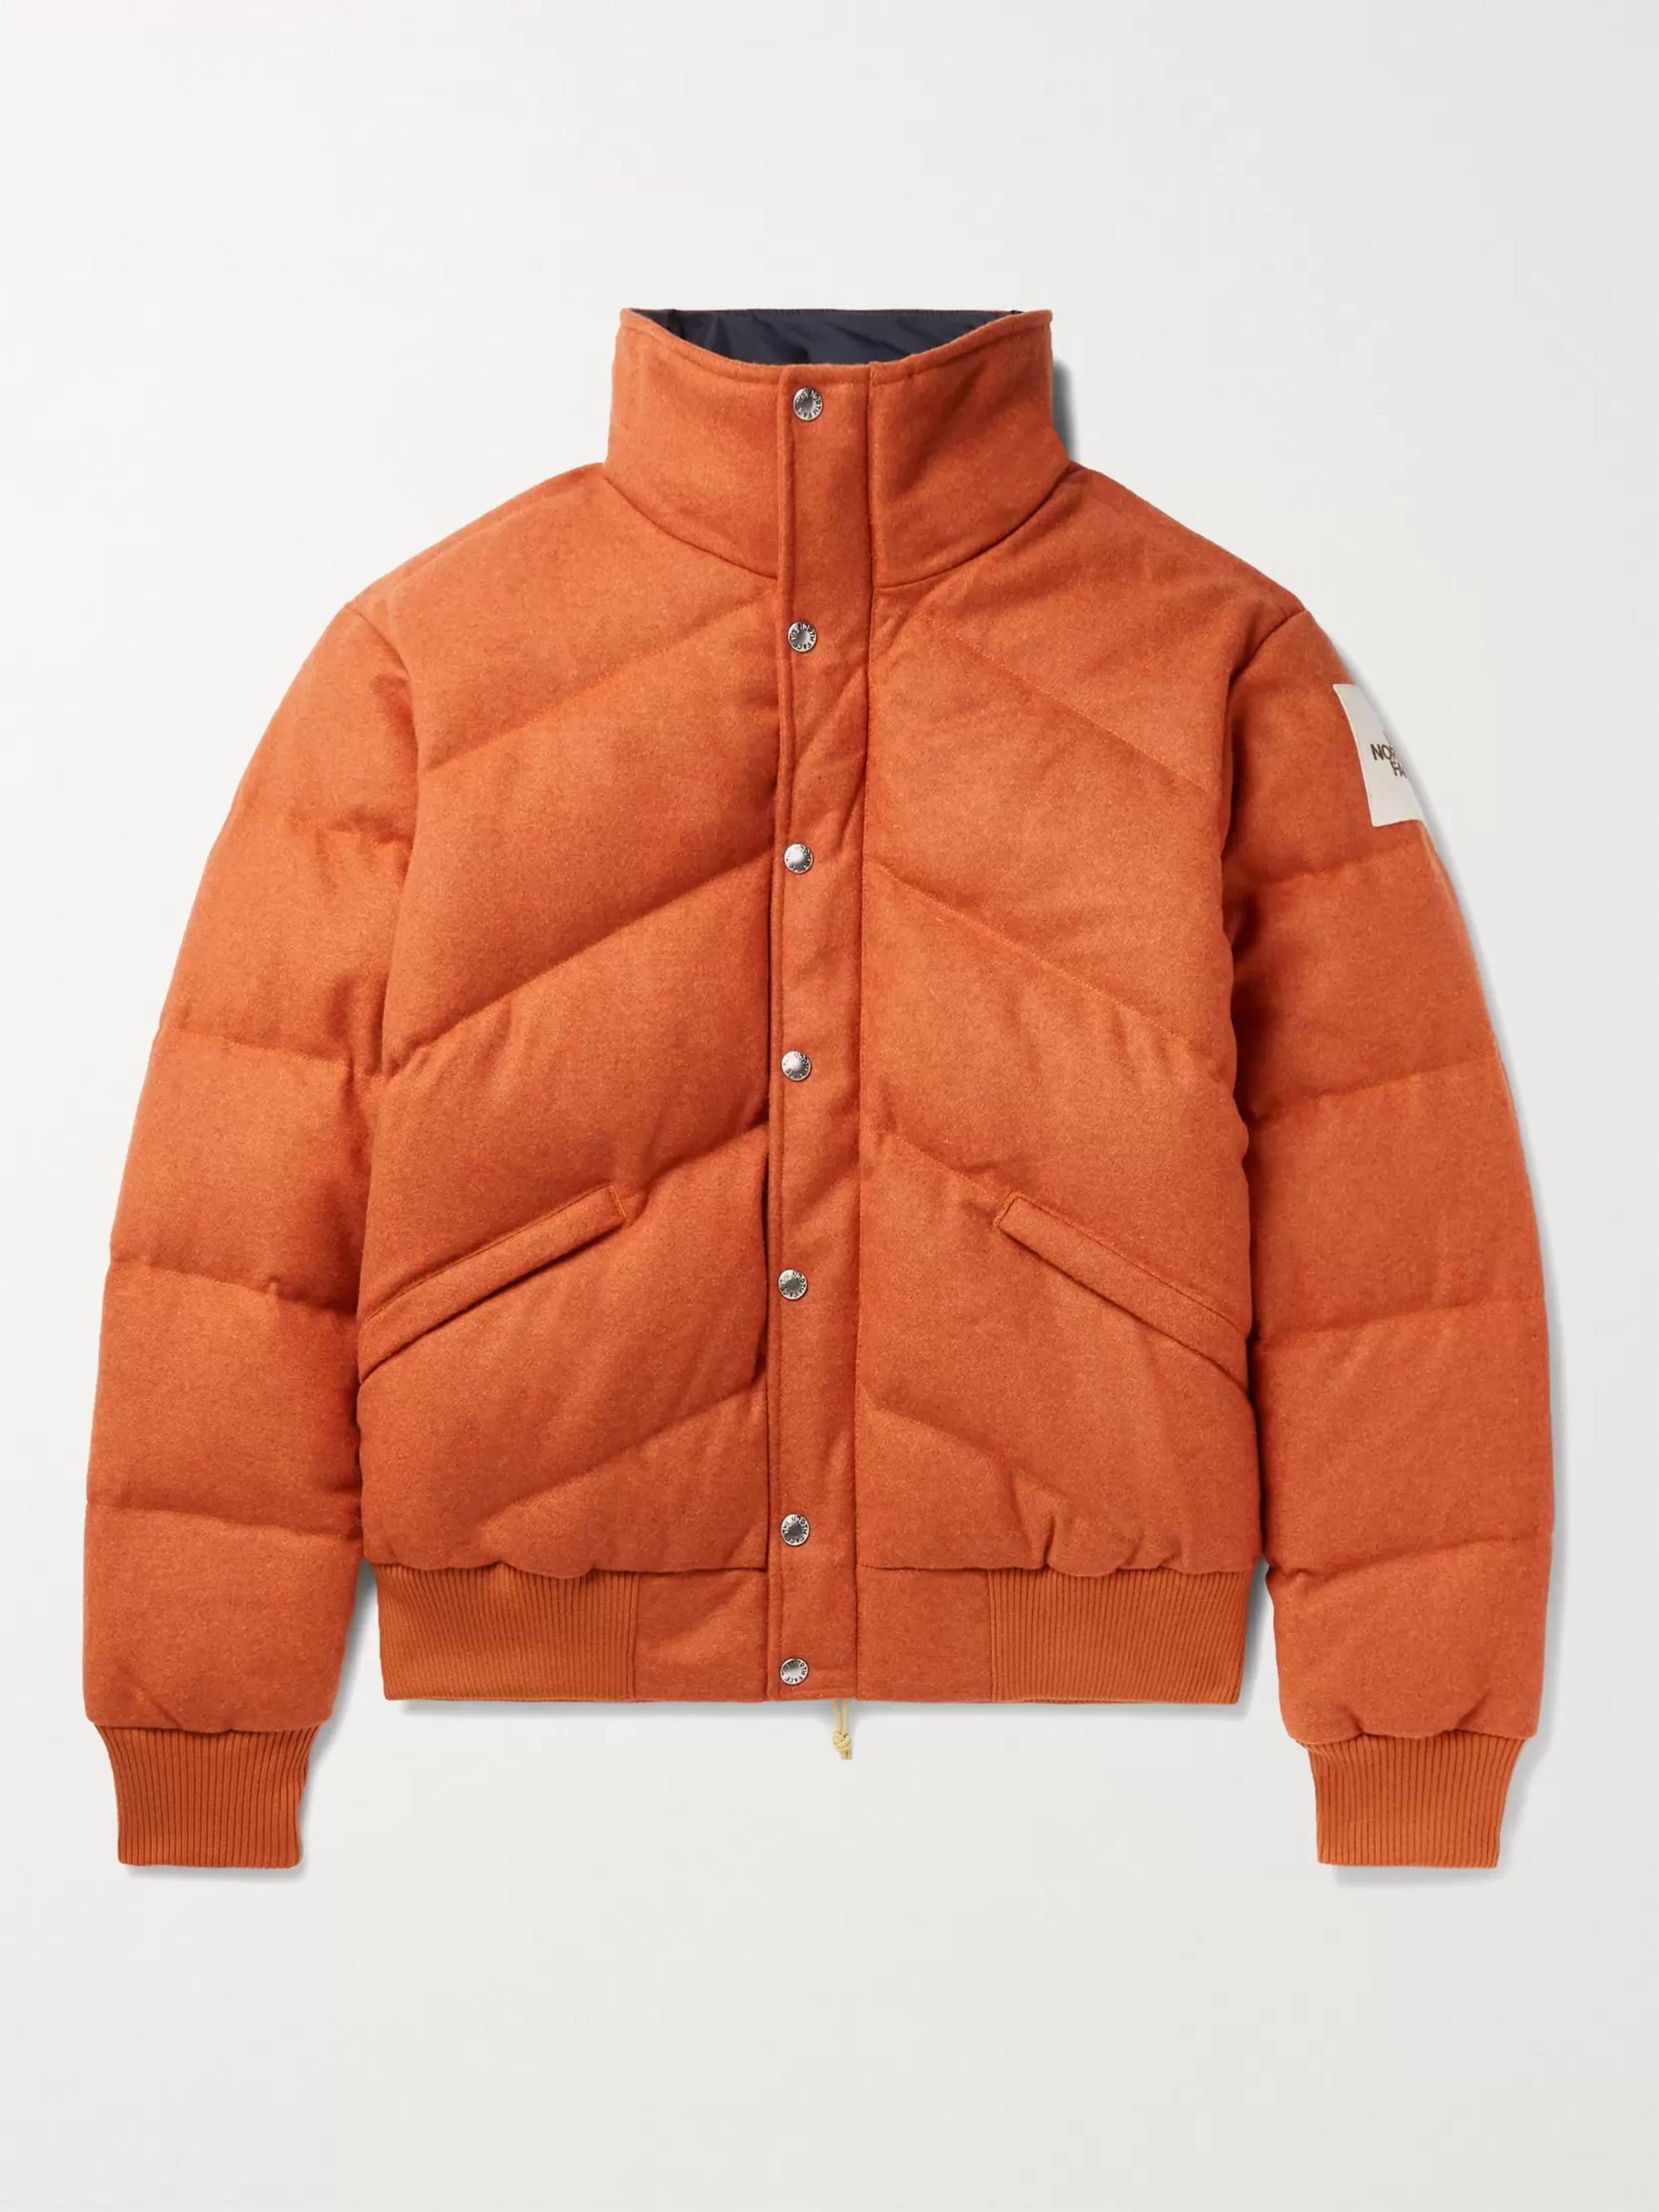 north face orange down jacket